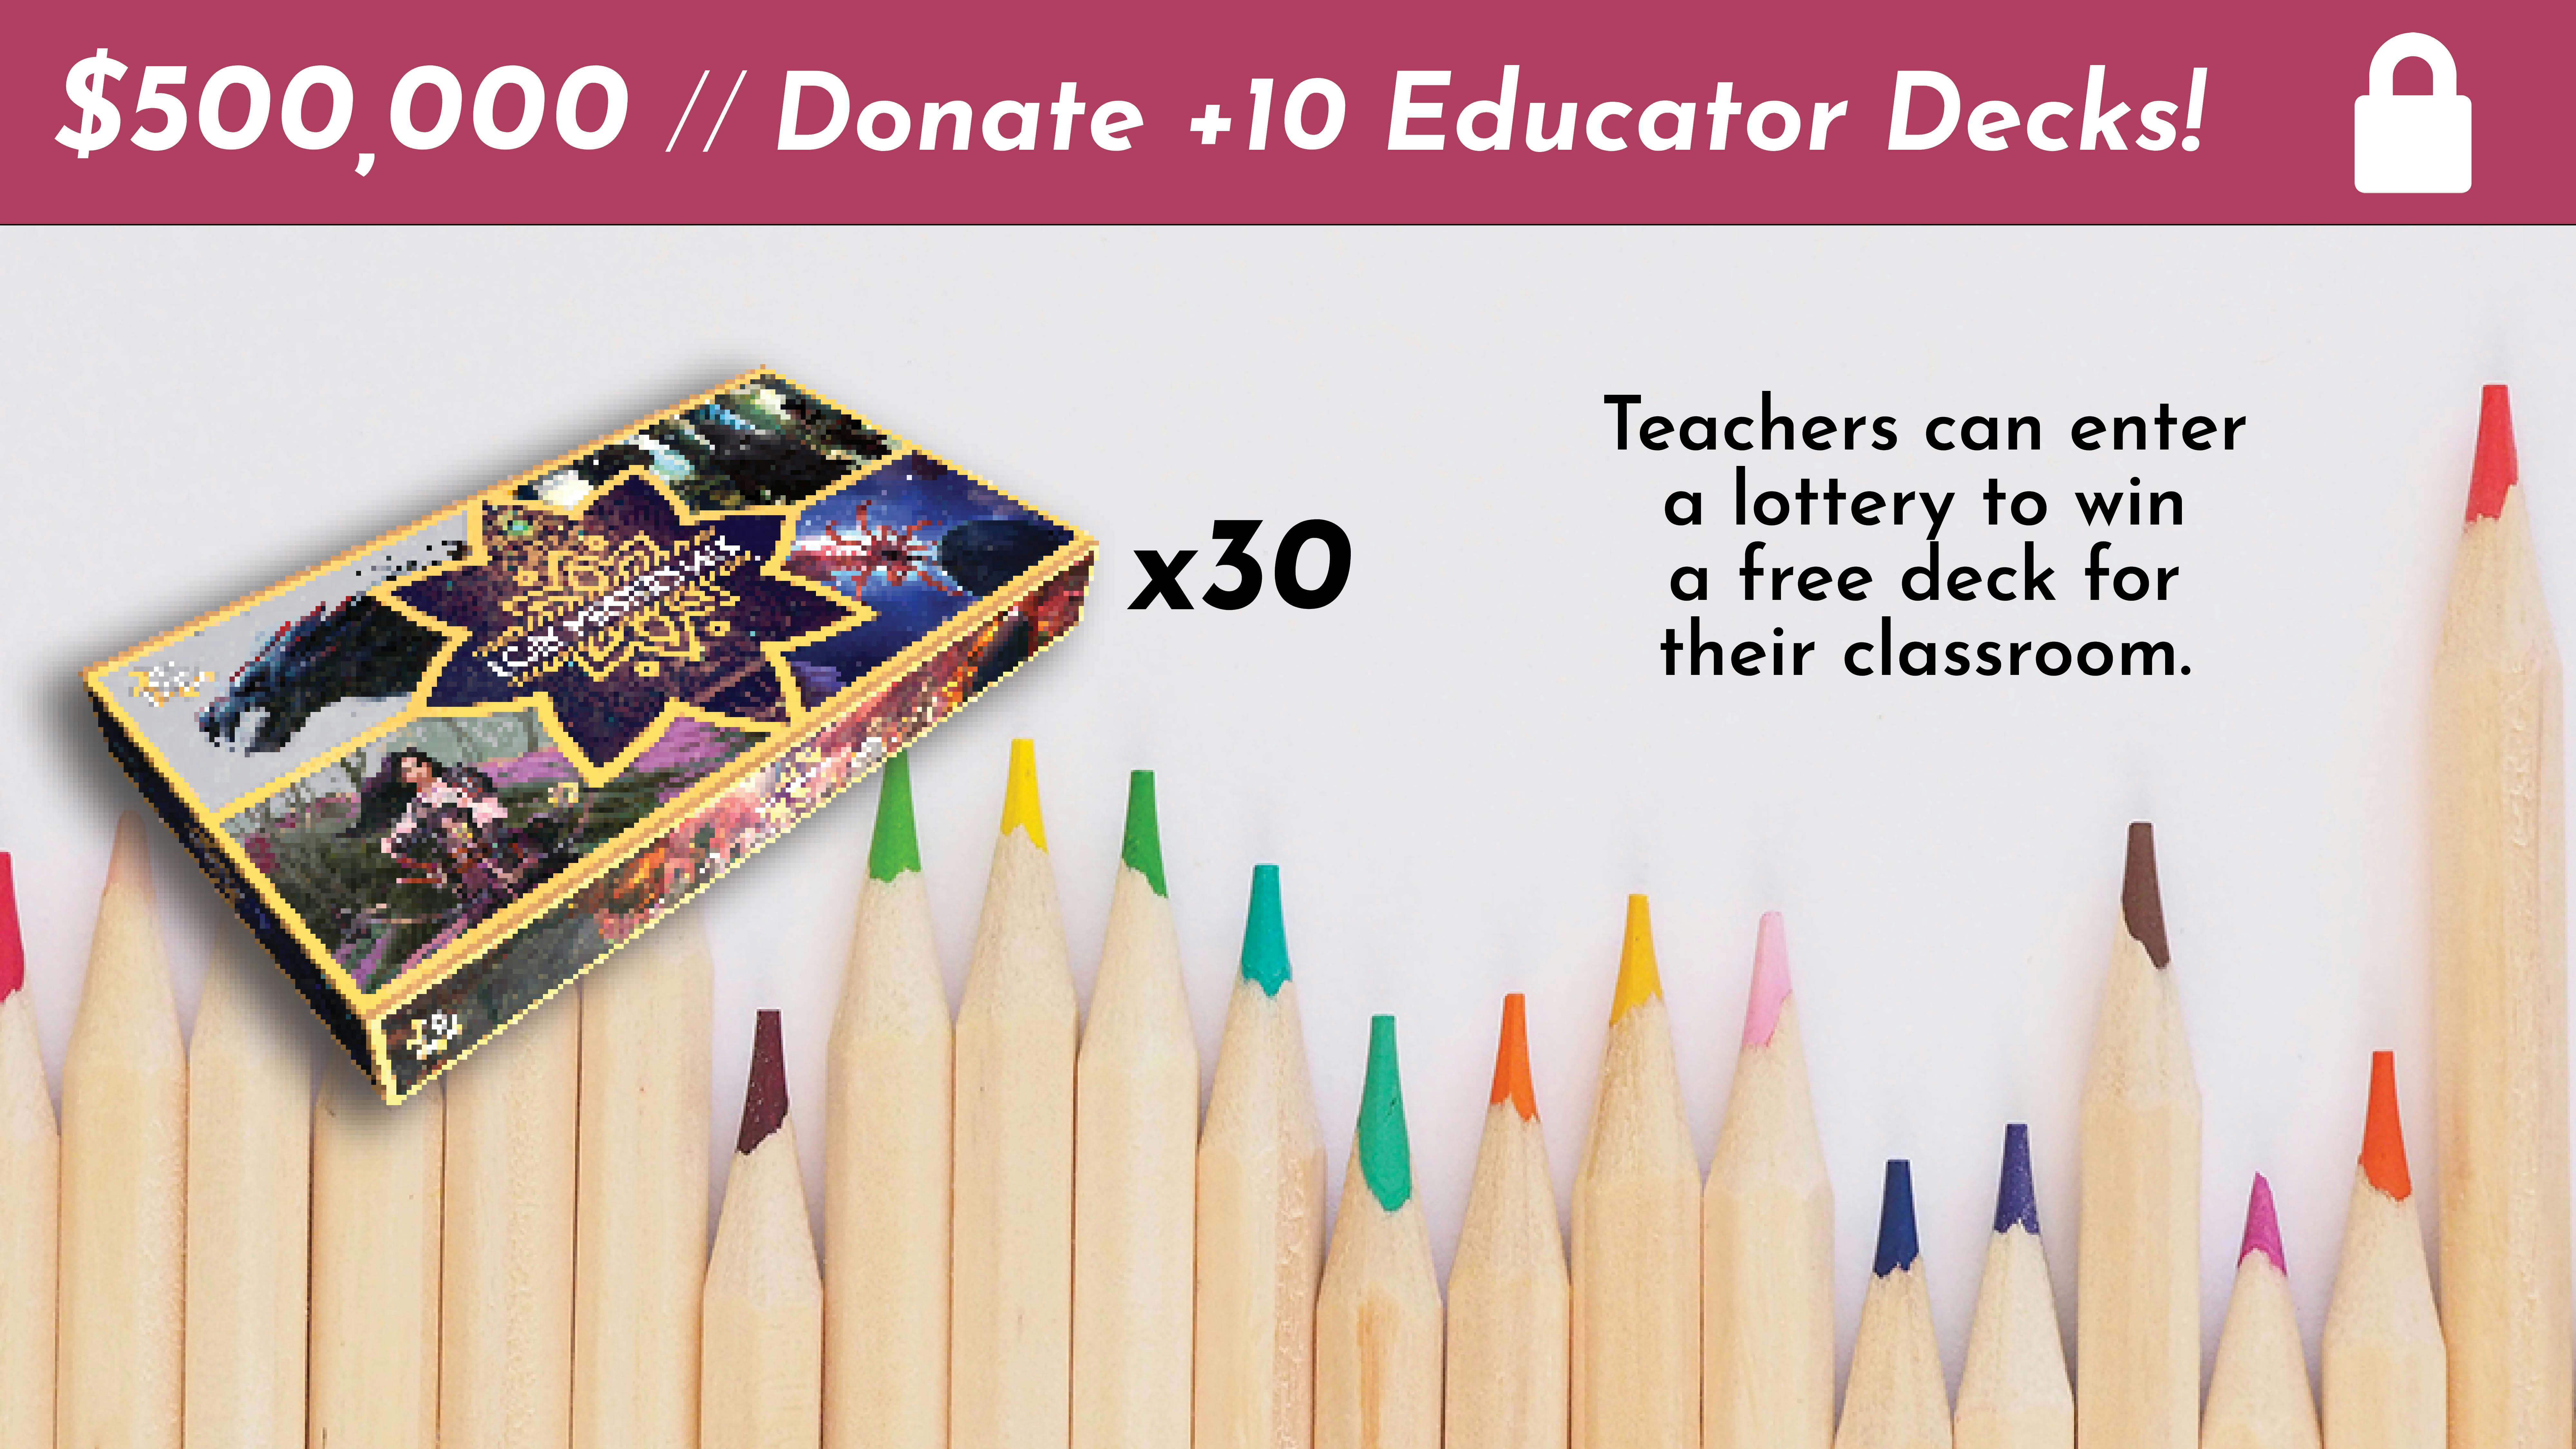 Donate 10 More Decks to Educators